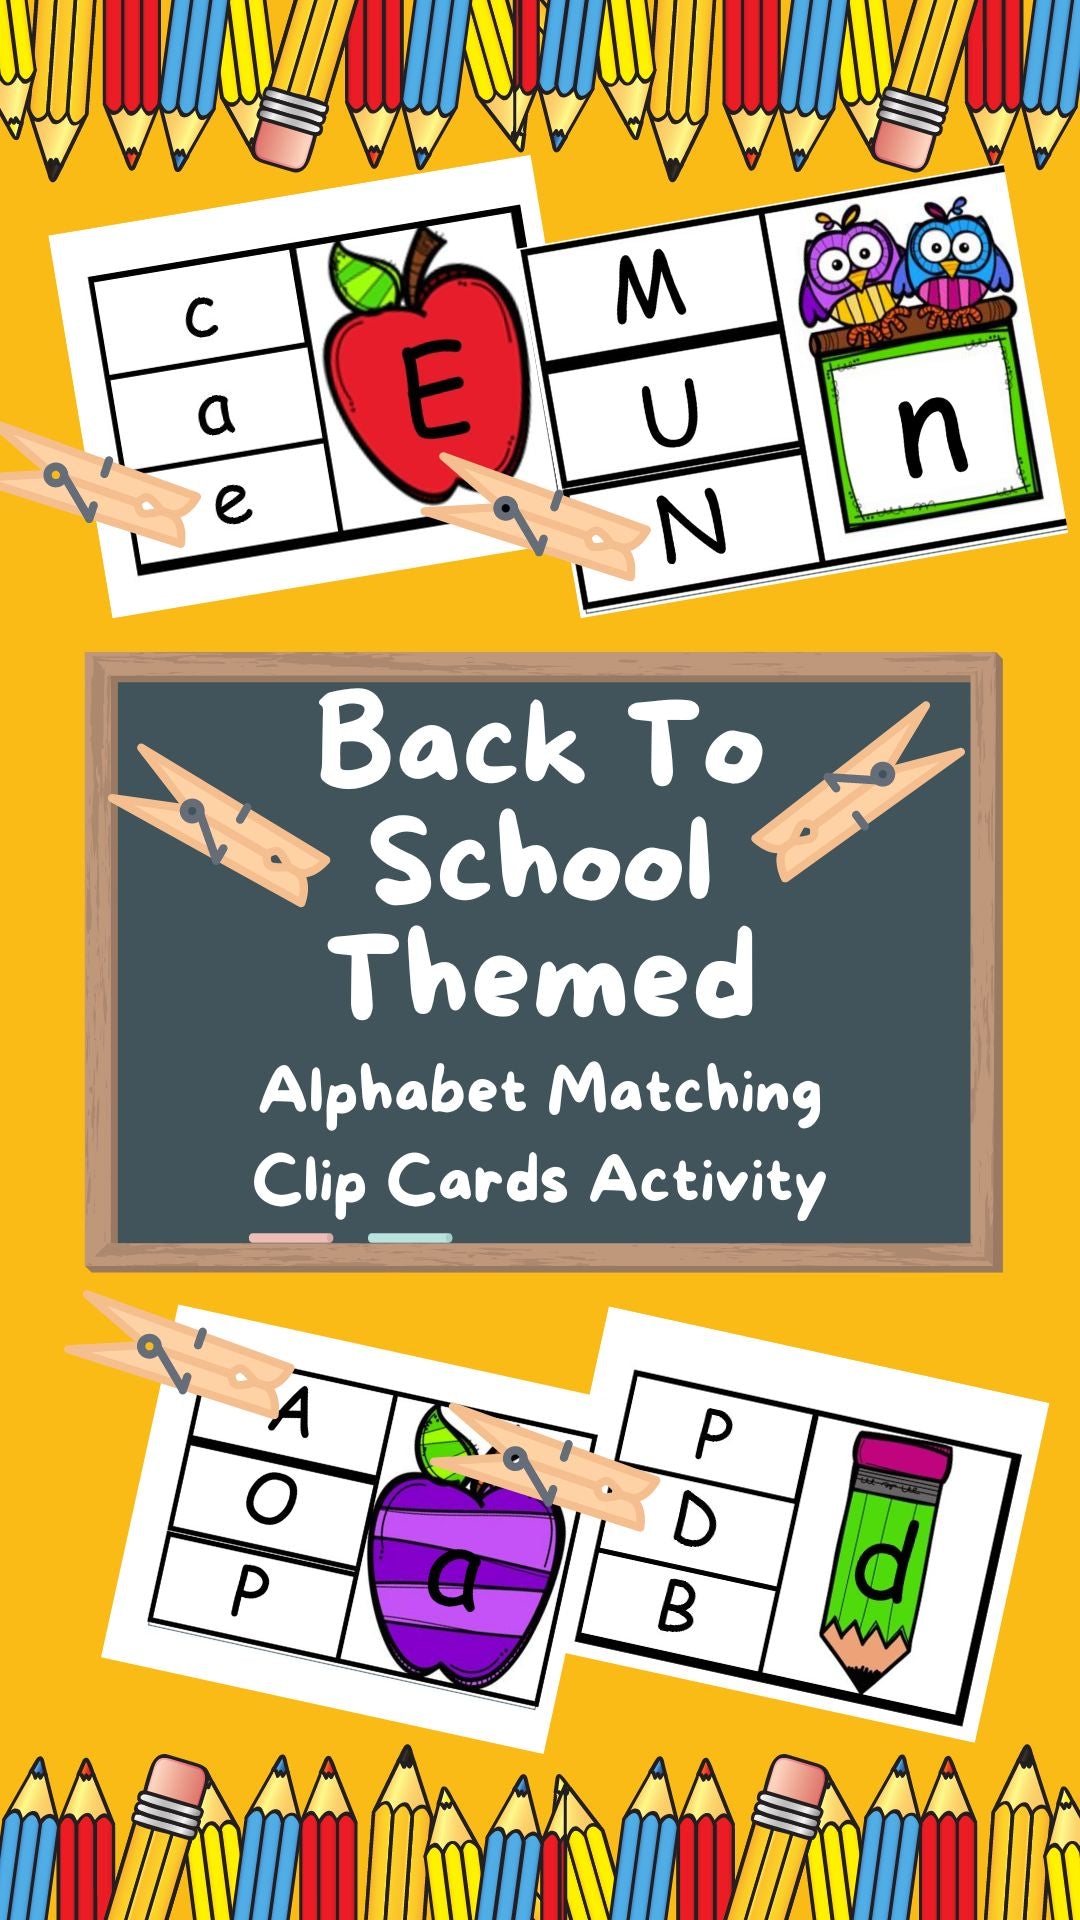 Back To School Themed Alphabet Matching Activity Card Set Pre-K/Kindergarten